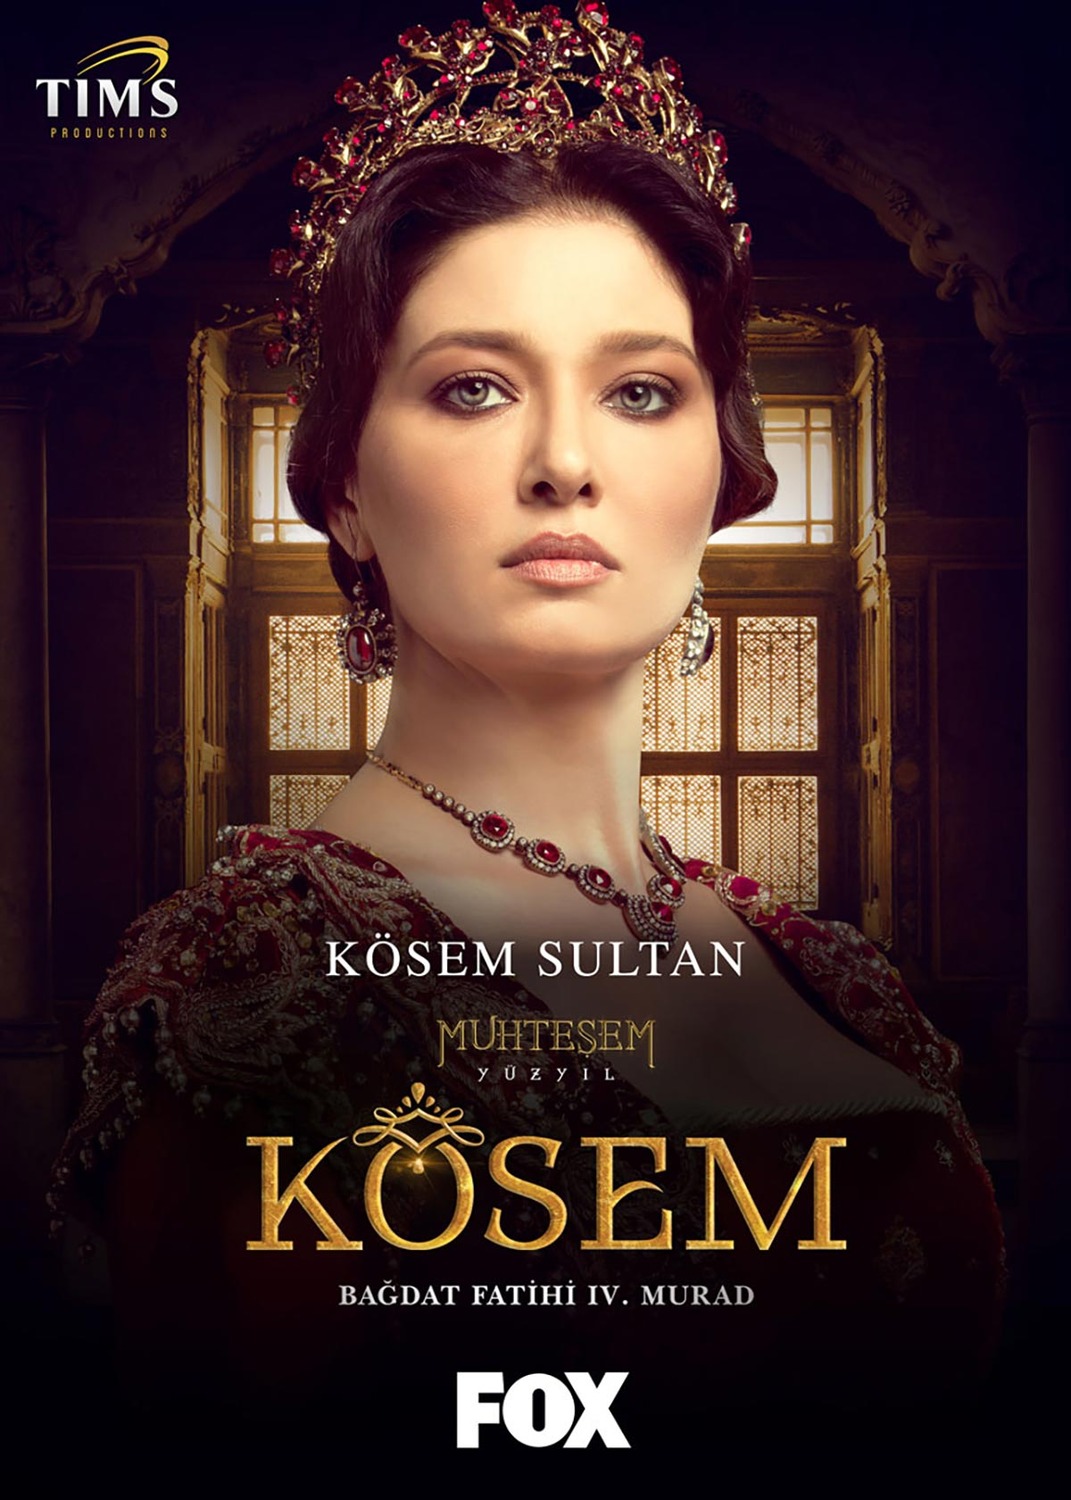 Extra Large TV Poster Image for Muhtesem Yüzyil: Kösem (#9 of 10)